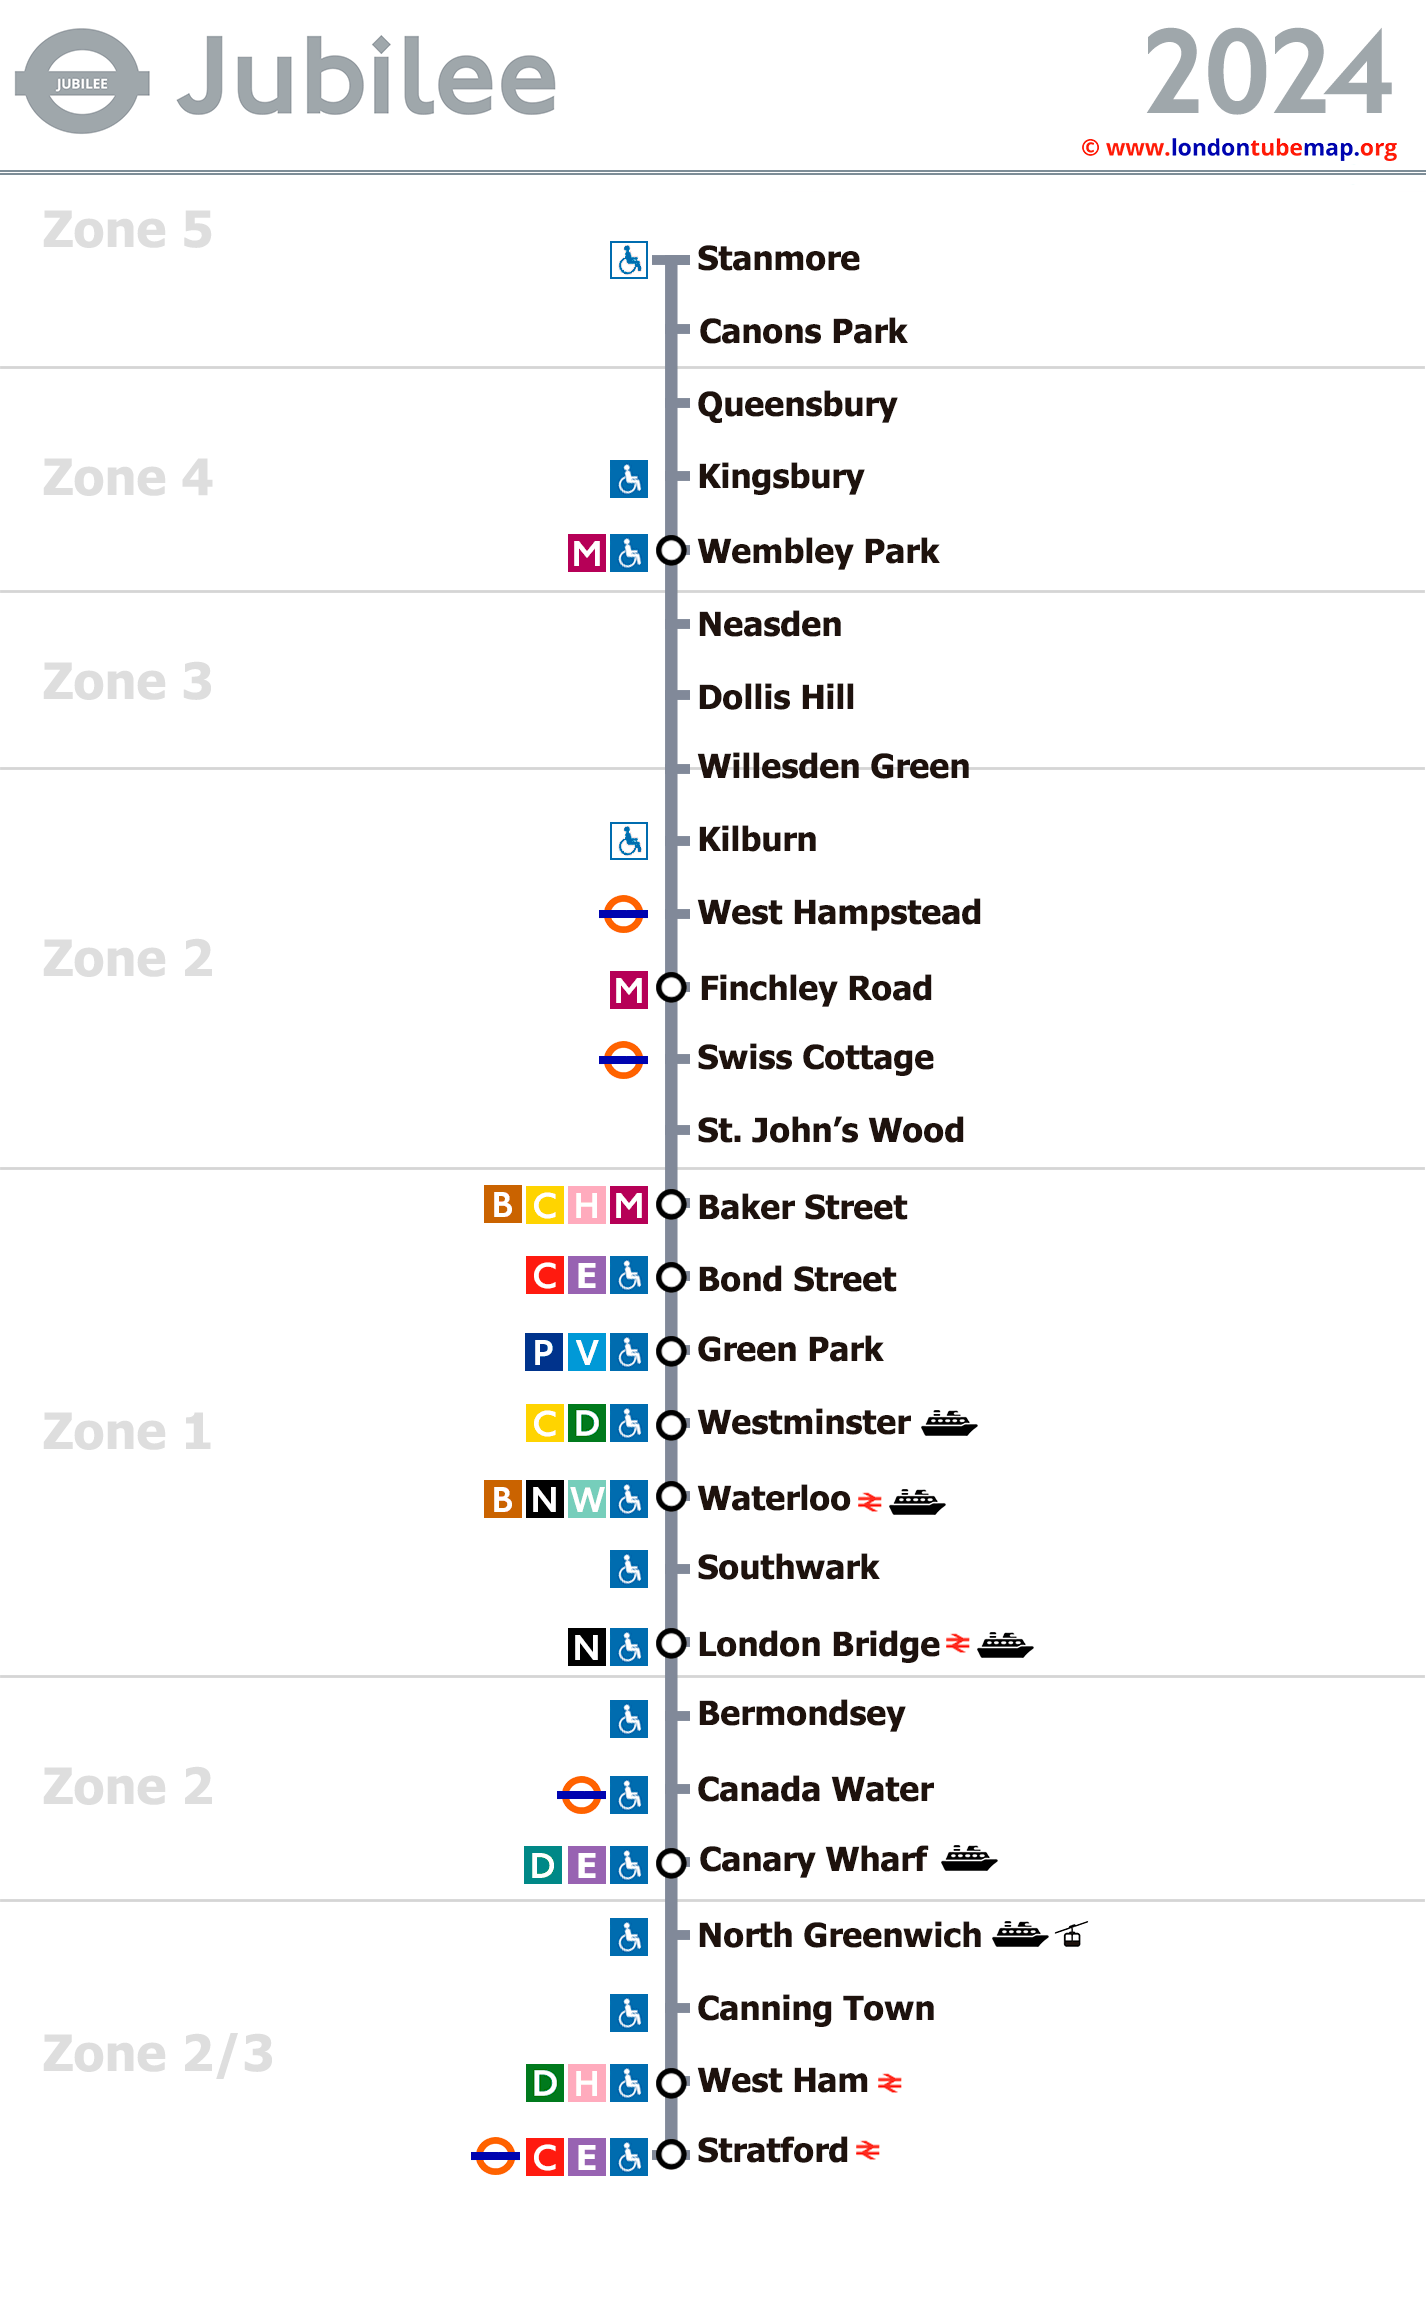 Jubilee tube line vertical 2024